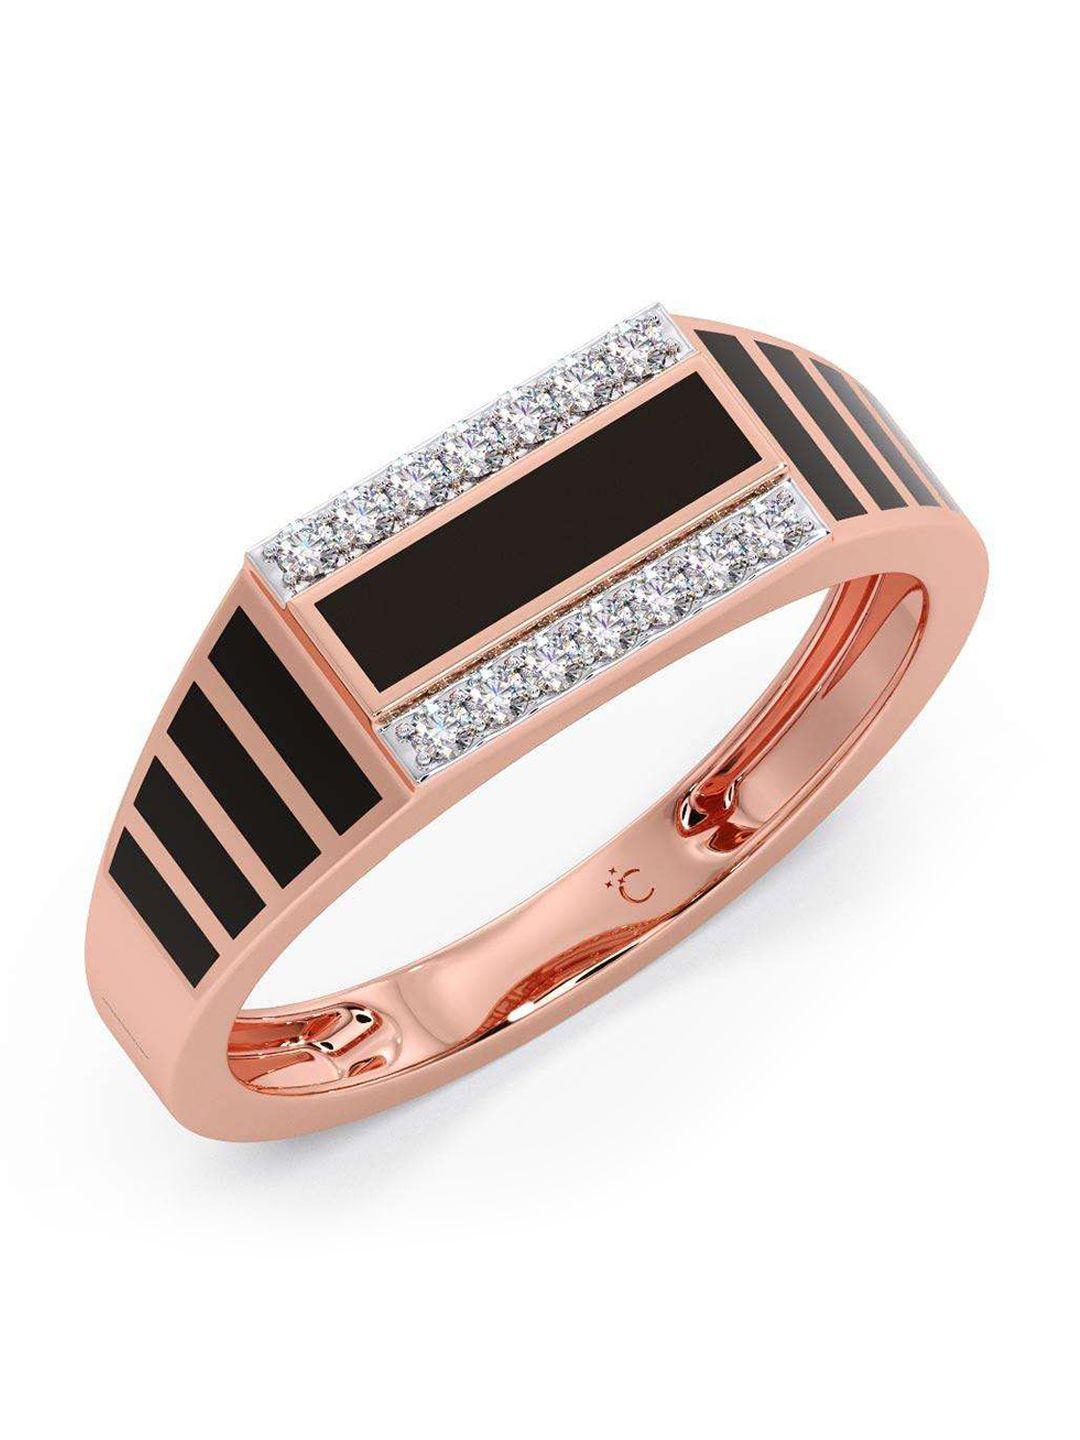 candere a kalyan jewellers company 14kt bis hallmark rose gold diamond ring - 3.29 gm